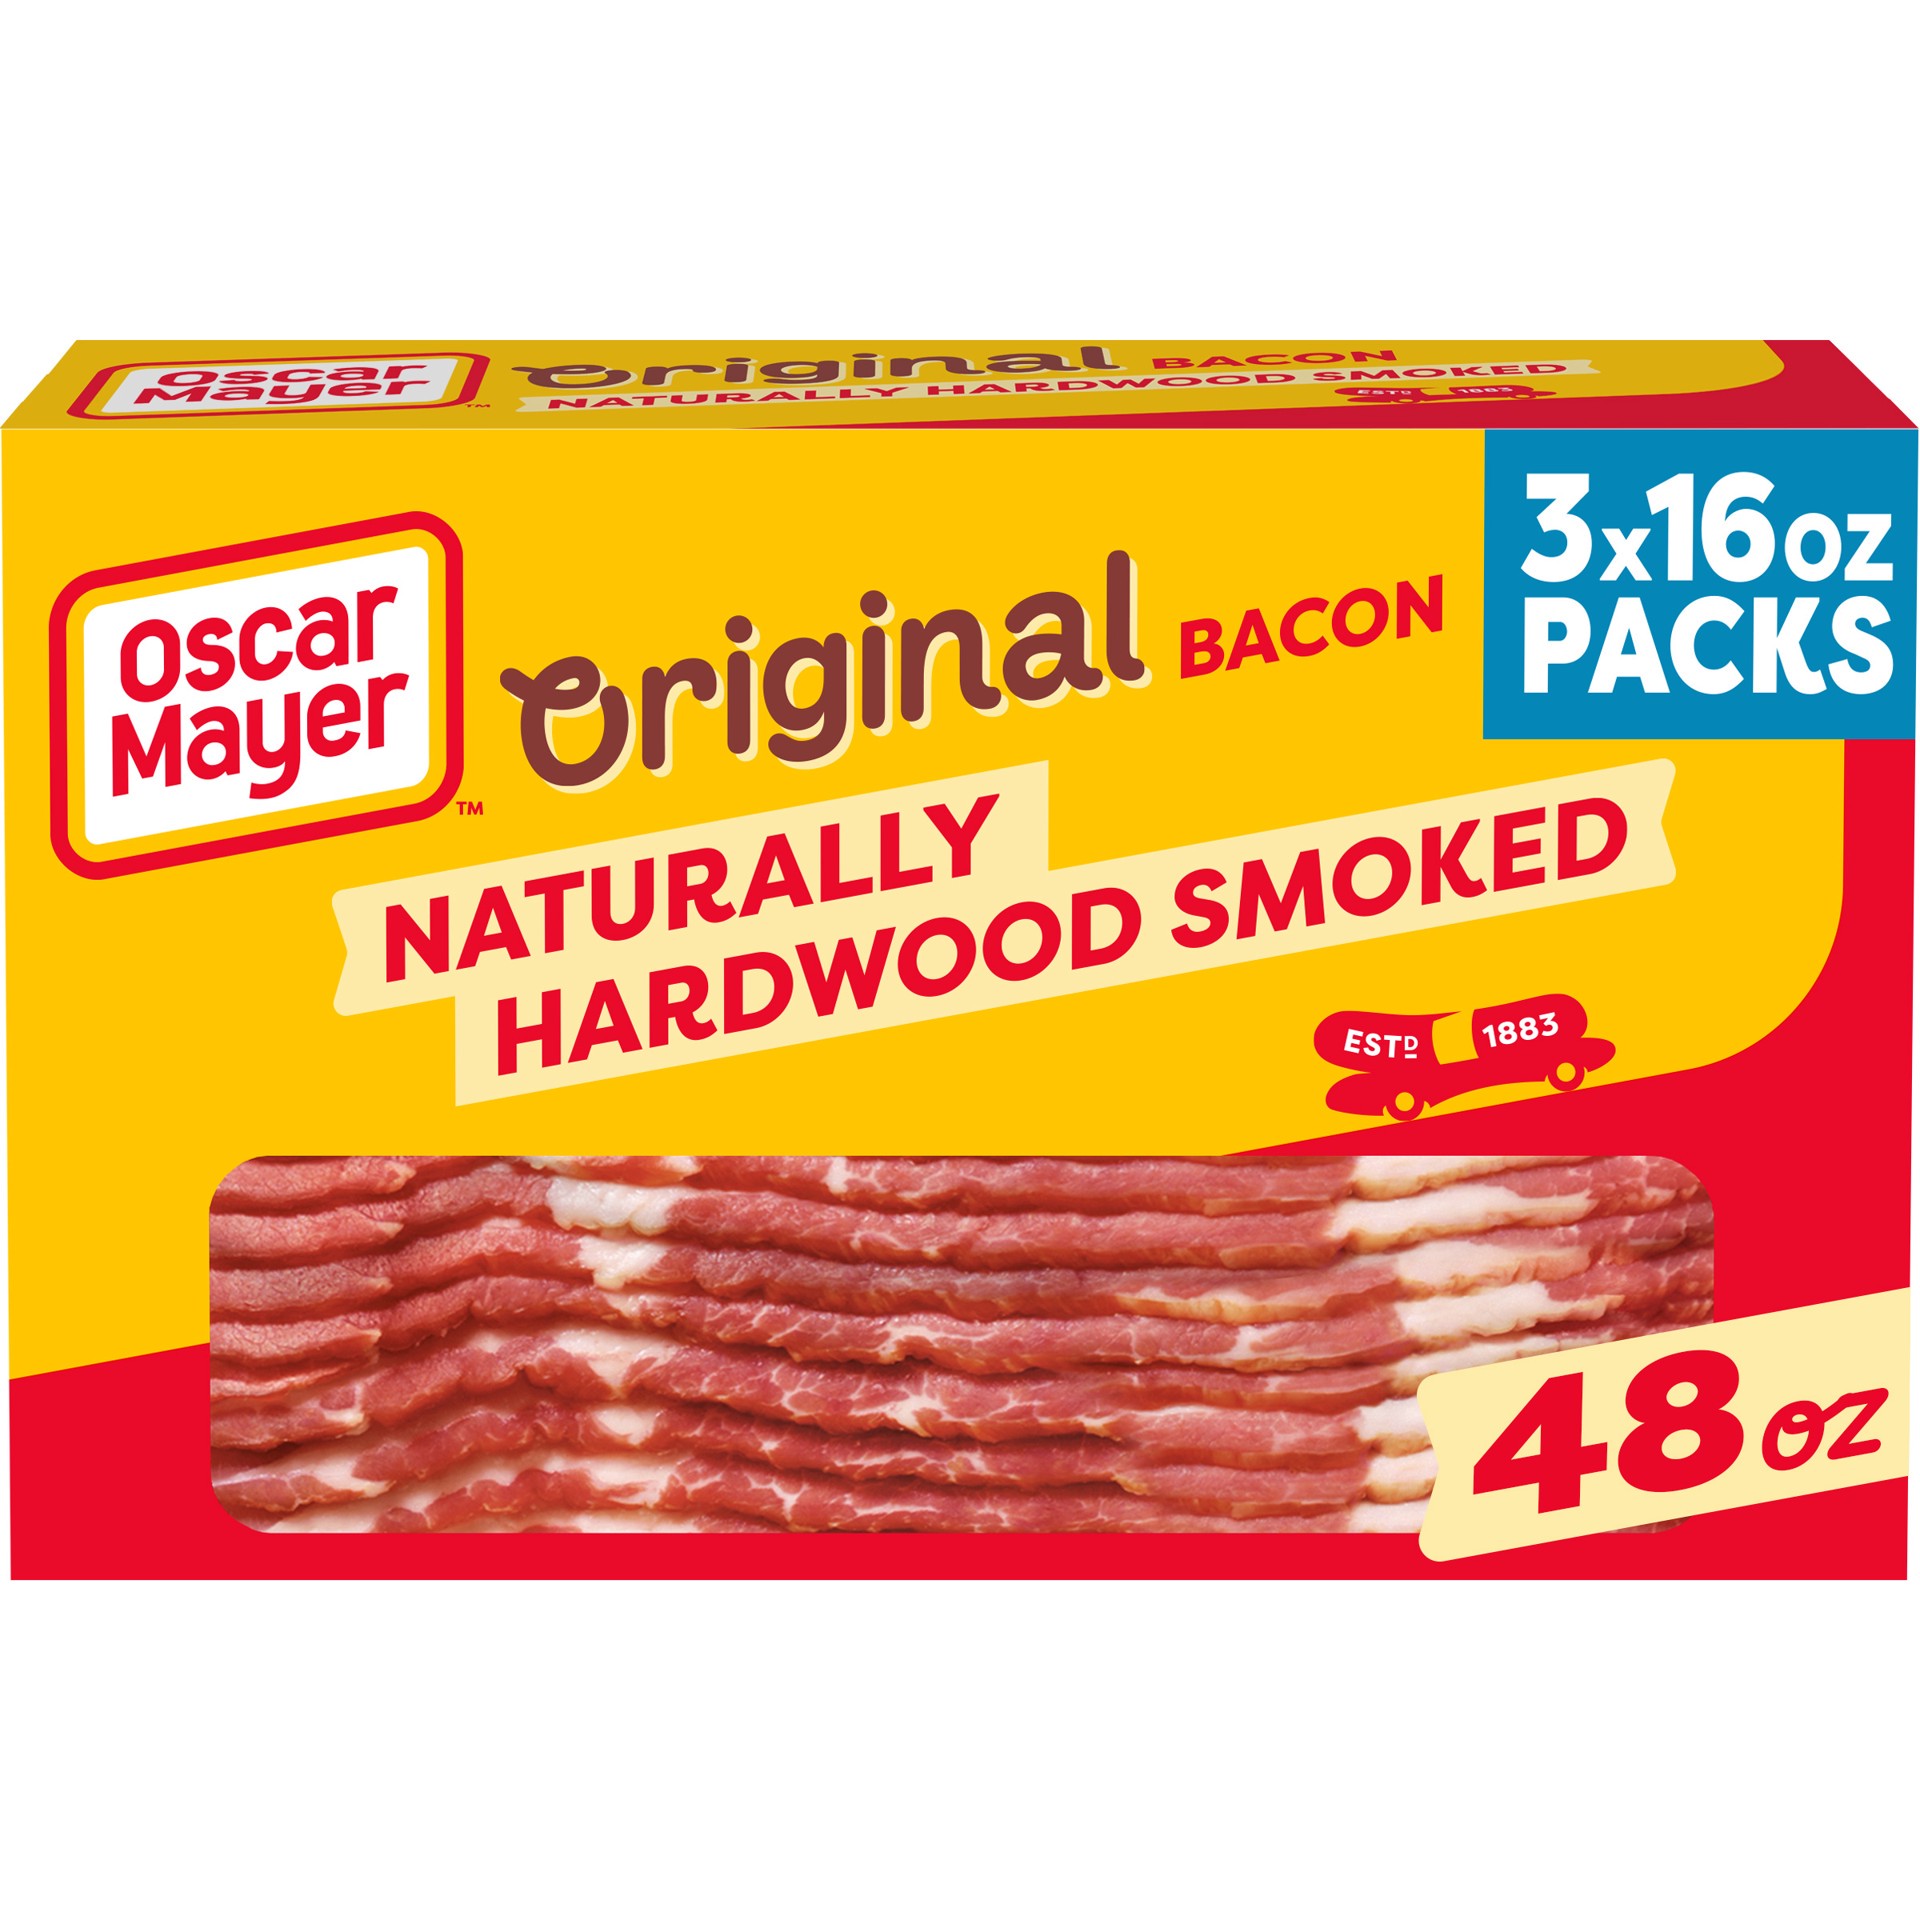 slide 1 of 5, Oscar Mayer Naturally Hardwood Smoked Bacon, 3 ct Box, 16 oz Packs, 53-55 total slices, 3 ct